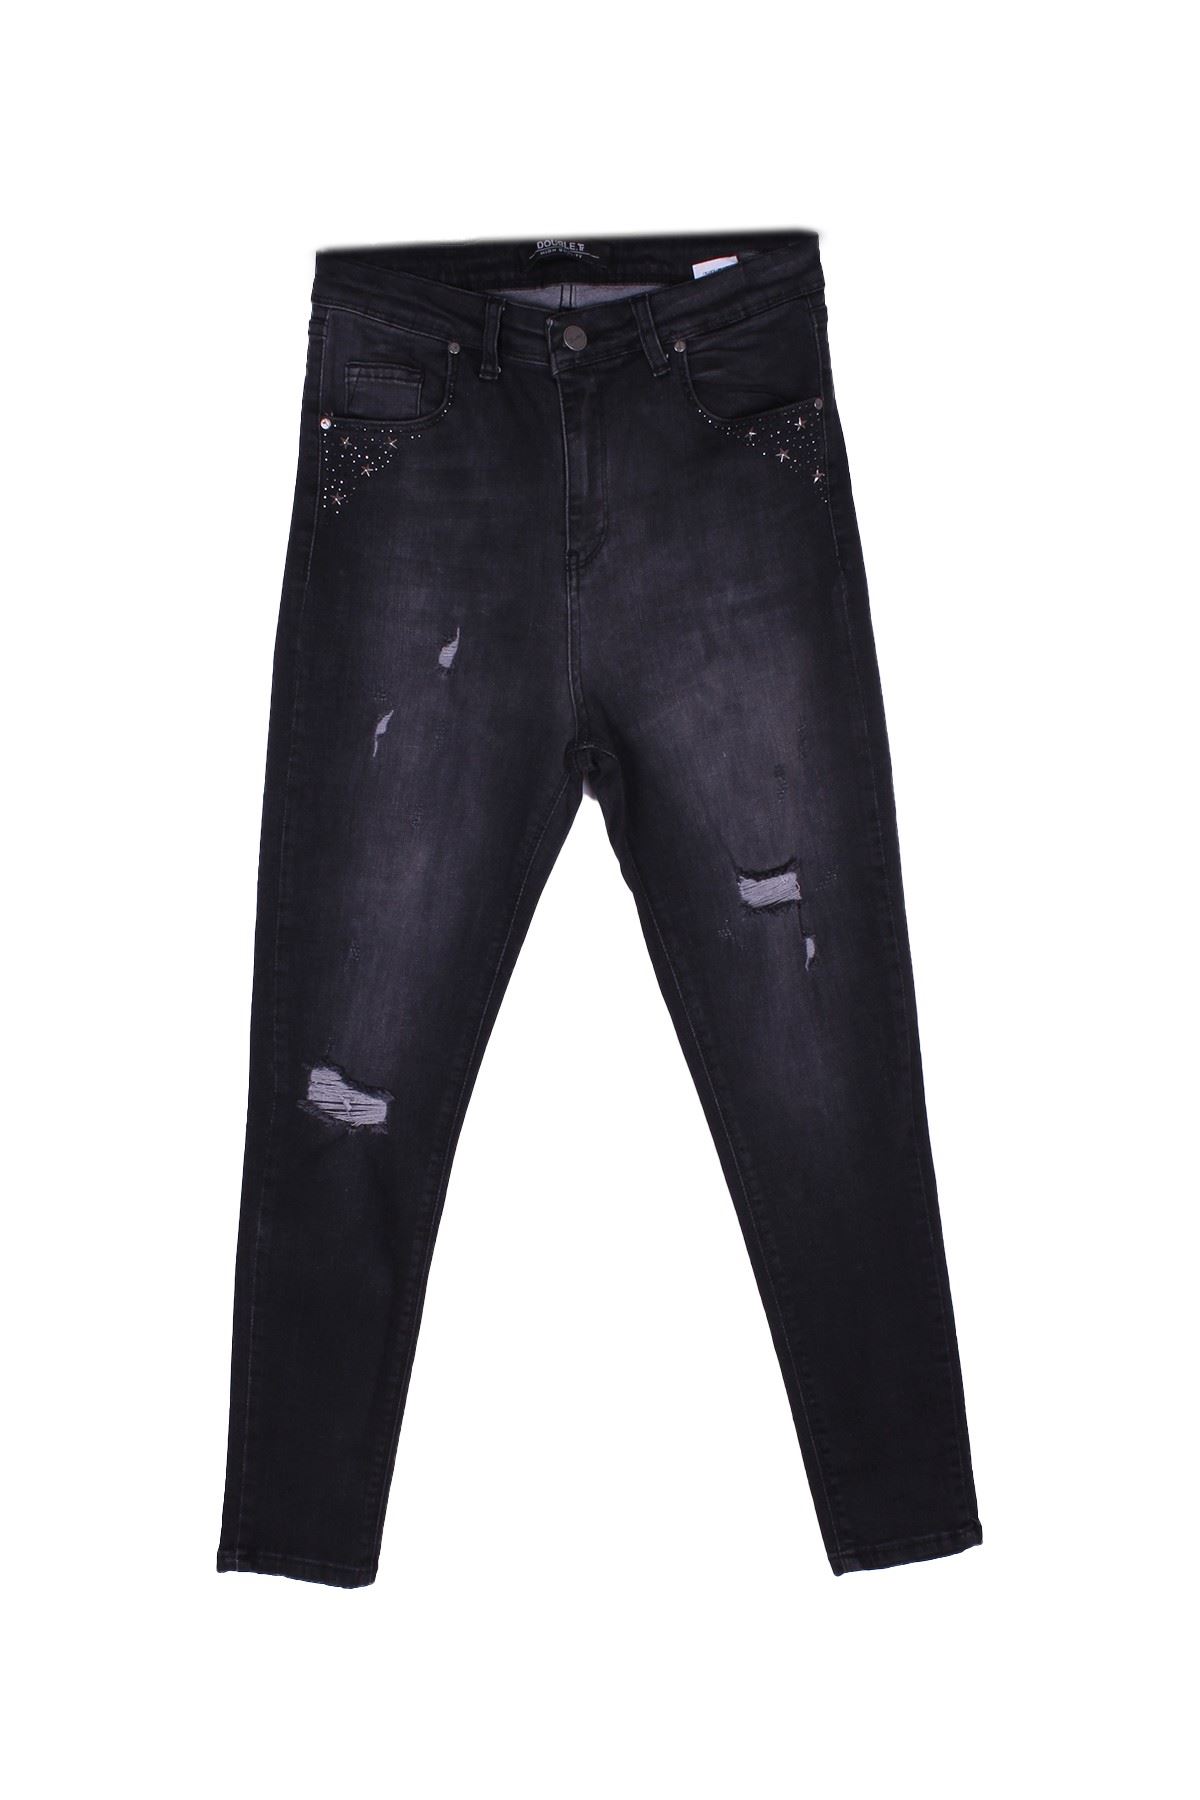 Giyinsen Kadın Siyah Jean Pantolon - 23KD52000016